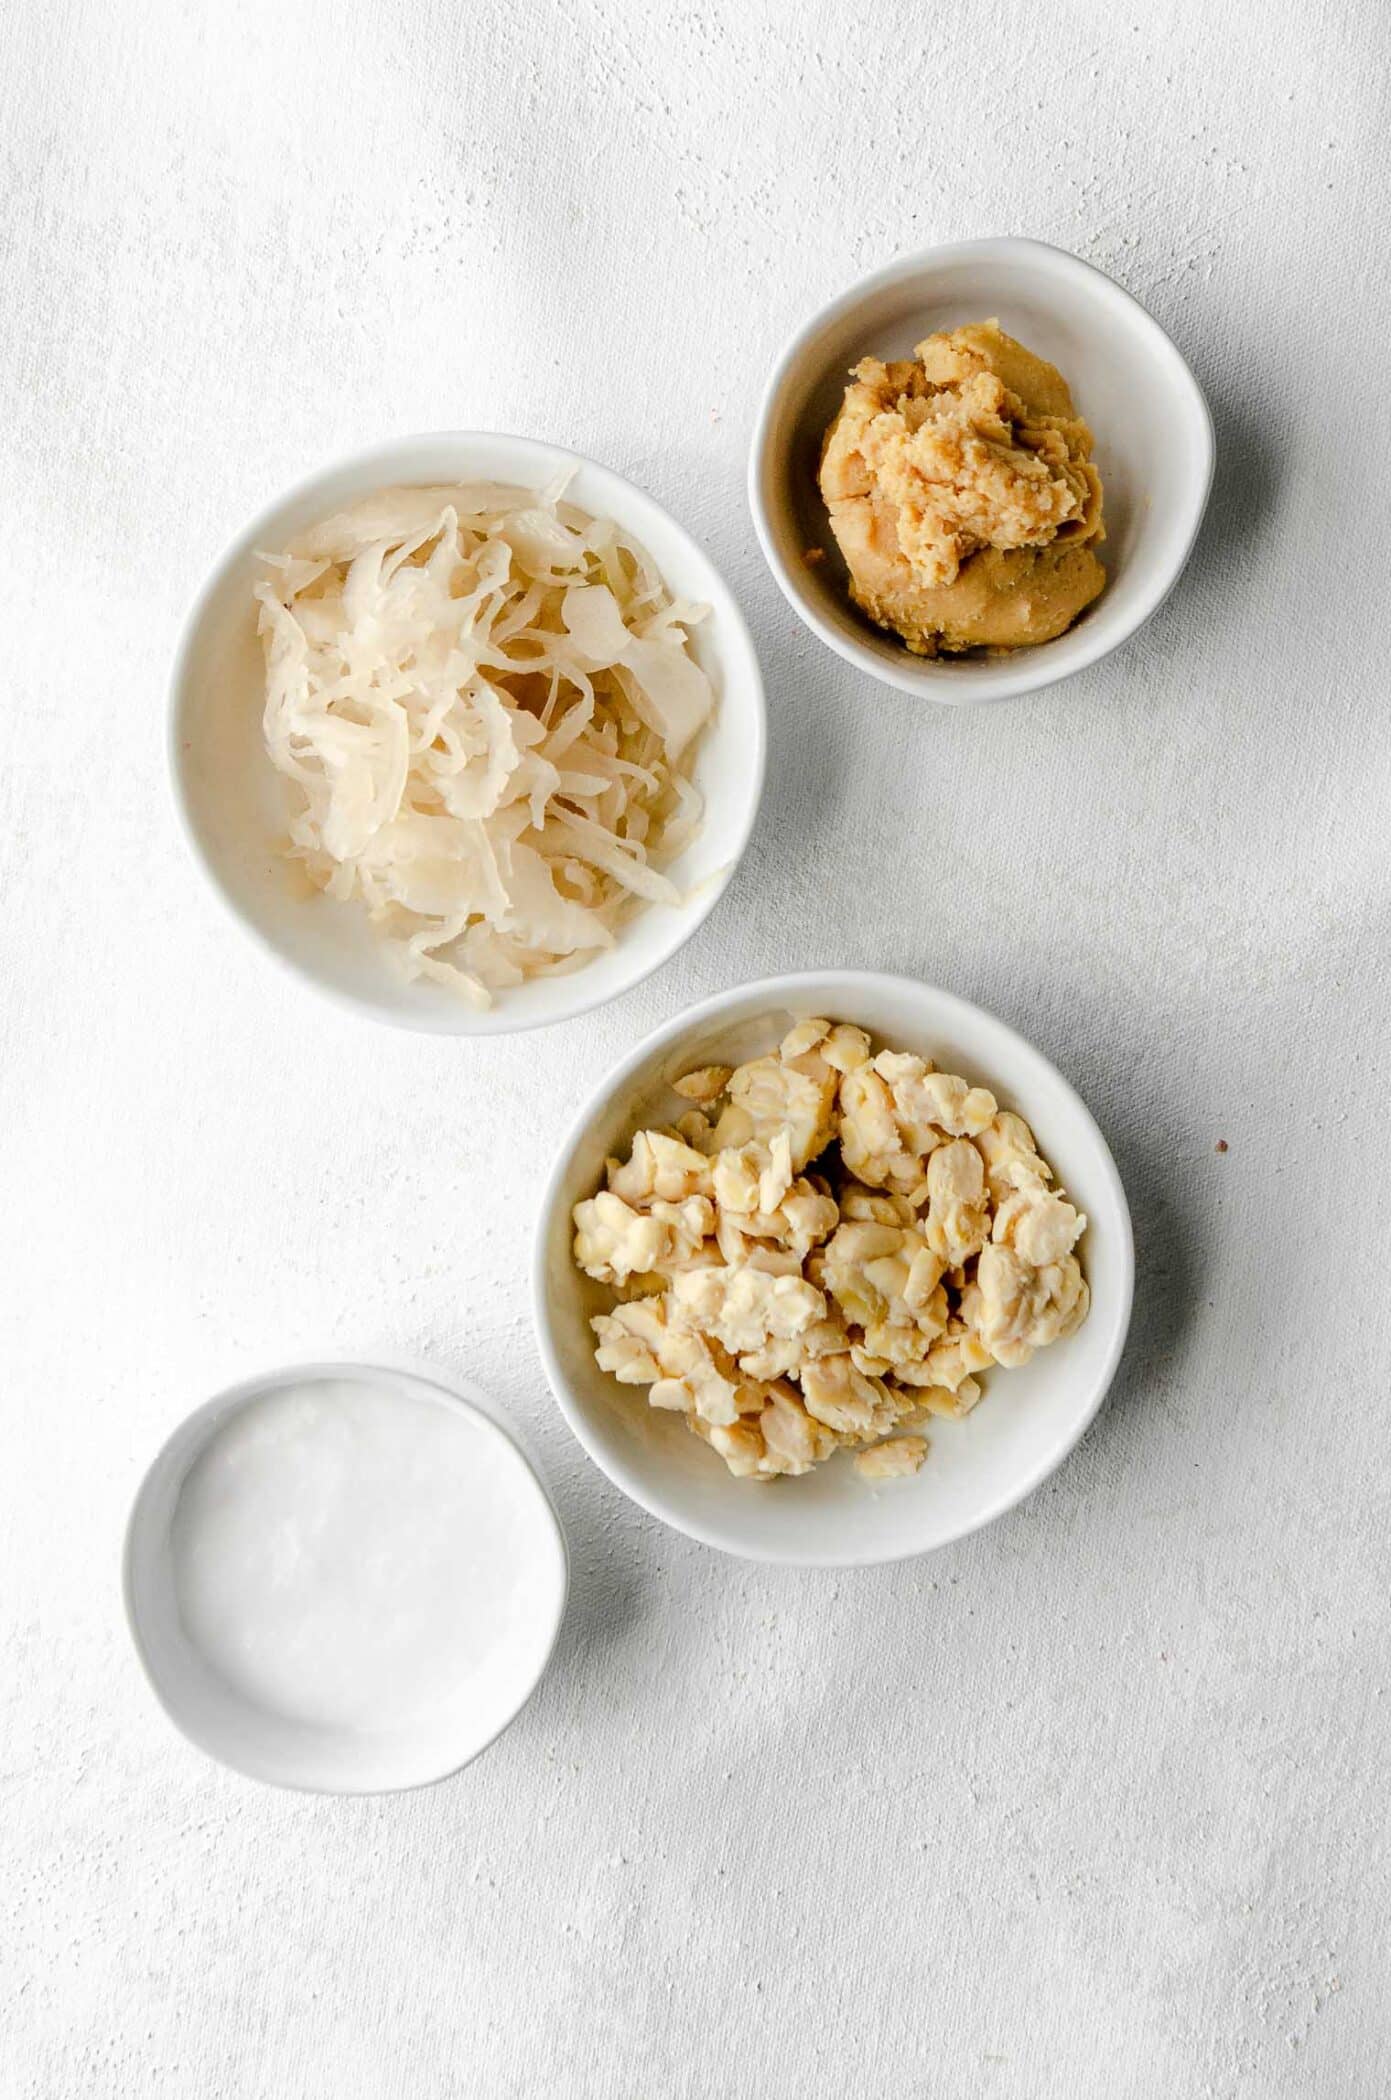 Examples of probiotic foods such as miso, sauerkraut, tempeh and yogurt